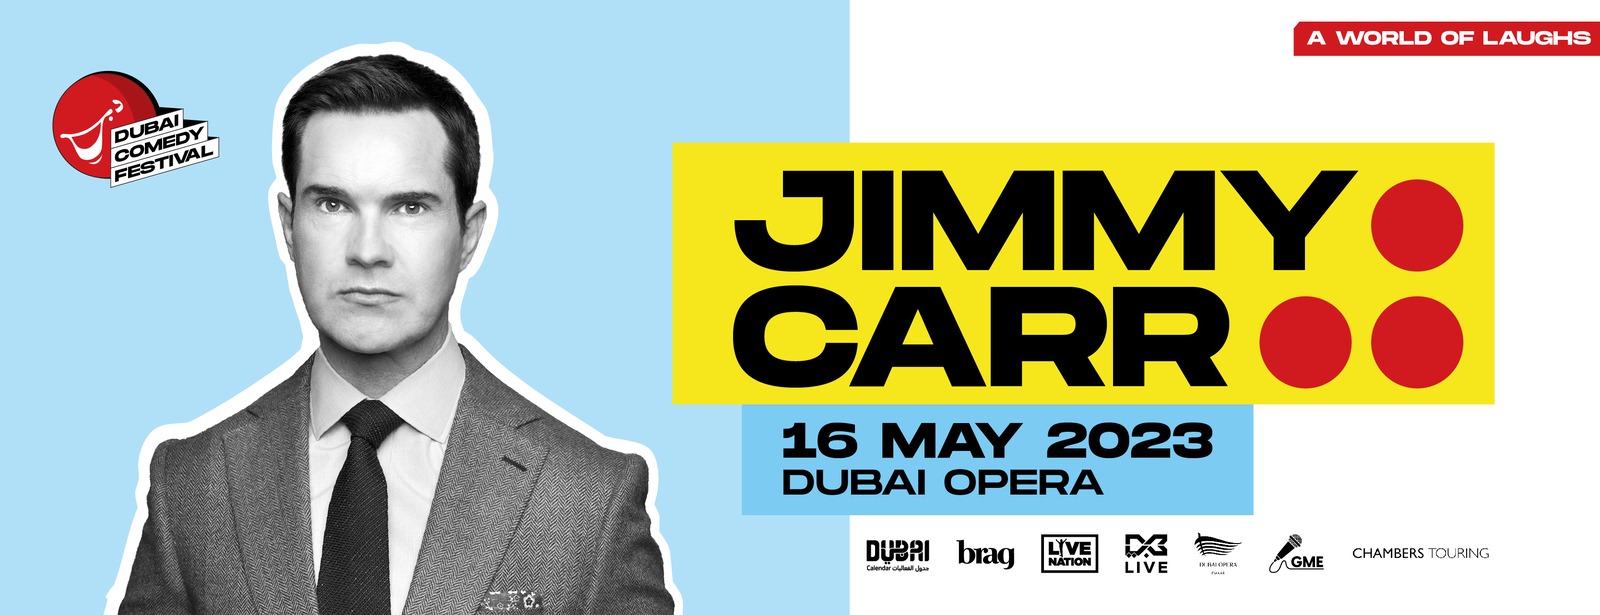 Jimmy Carr at Dubai Opera - Coming Soon in UAE